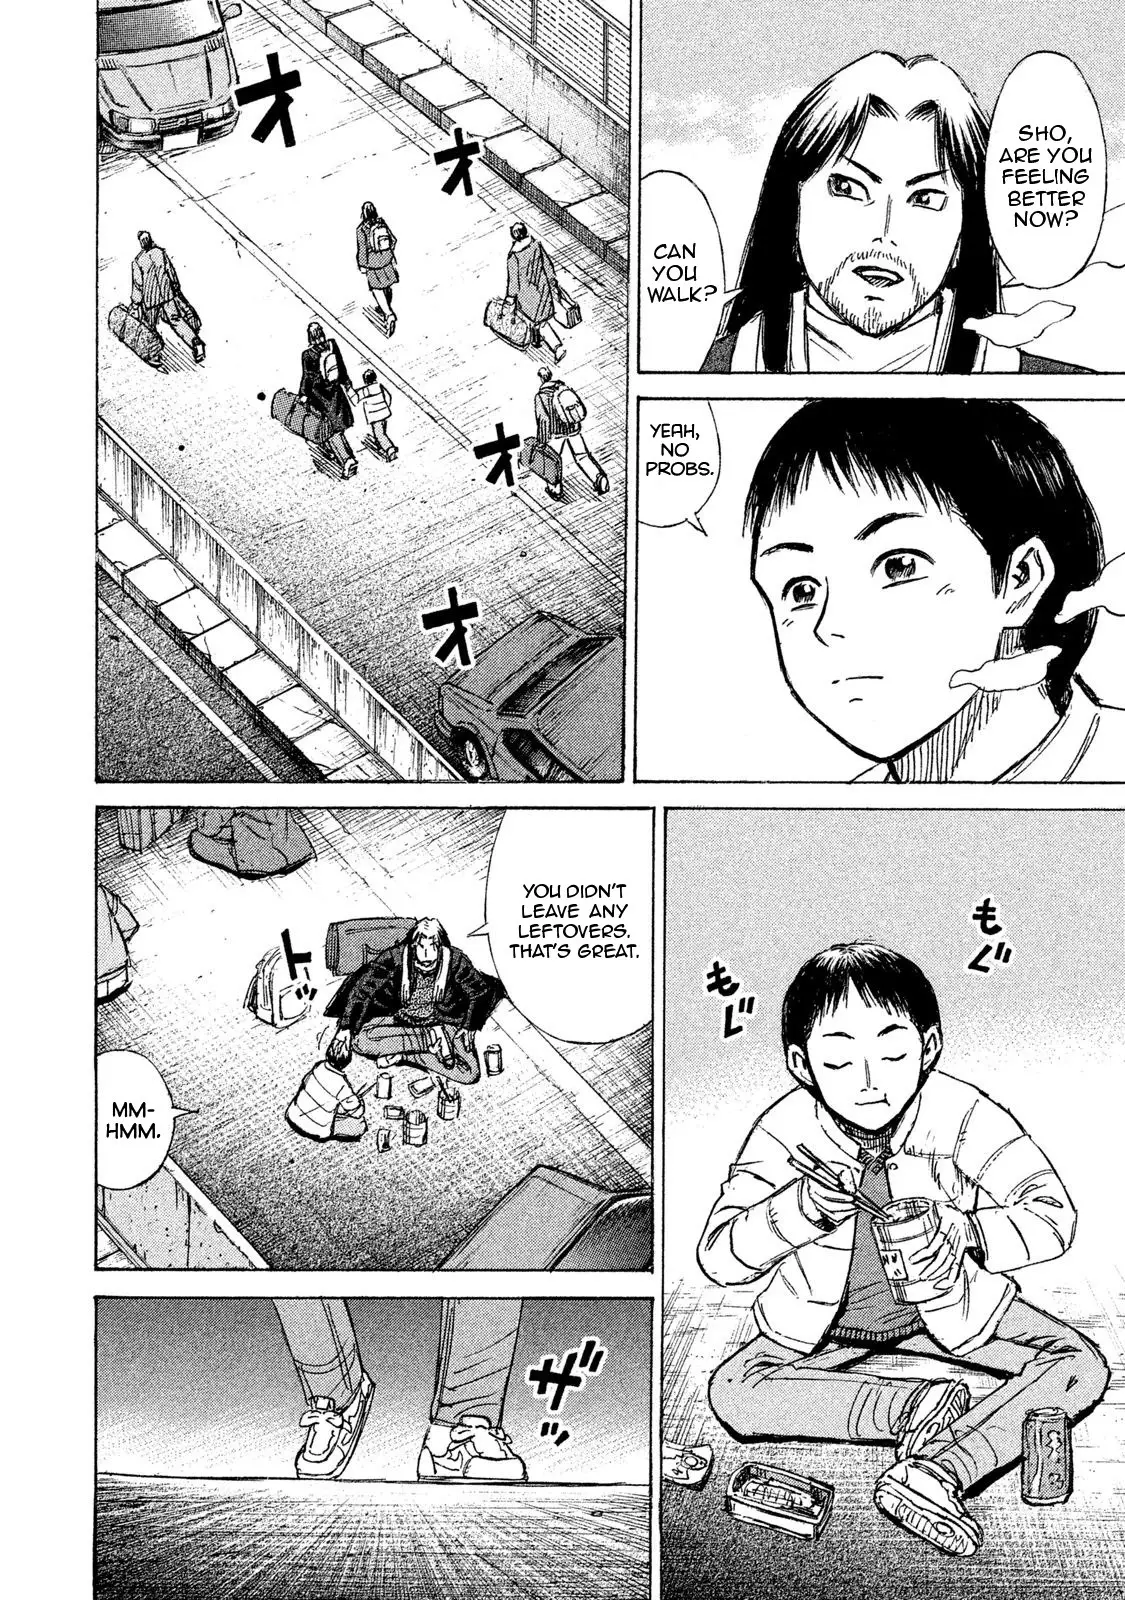 Higanjima - 48 Days Later - 20 page 9-43f4cd56